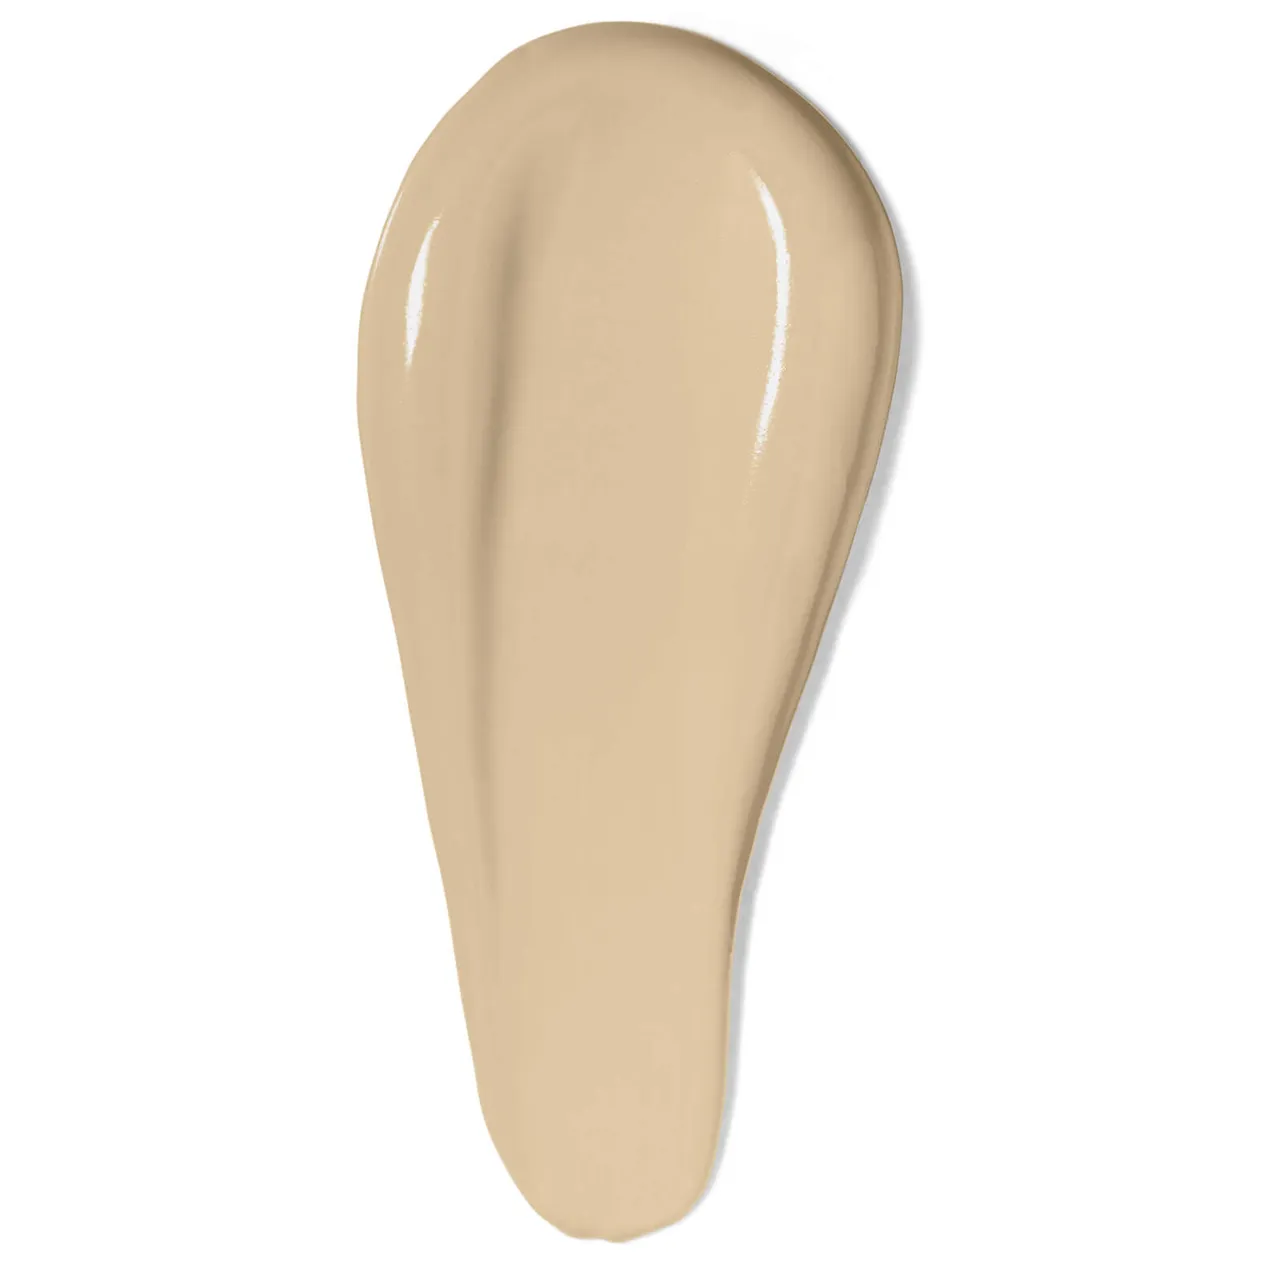 Bobbi Brown Skin Long-Wear Weightless Foundation SPF15 (Various Shades) - Cool Ivory